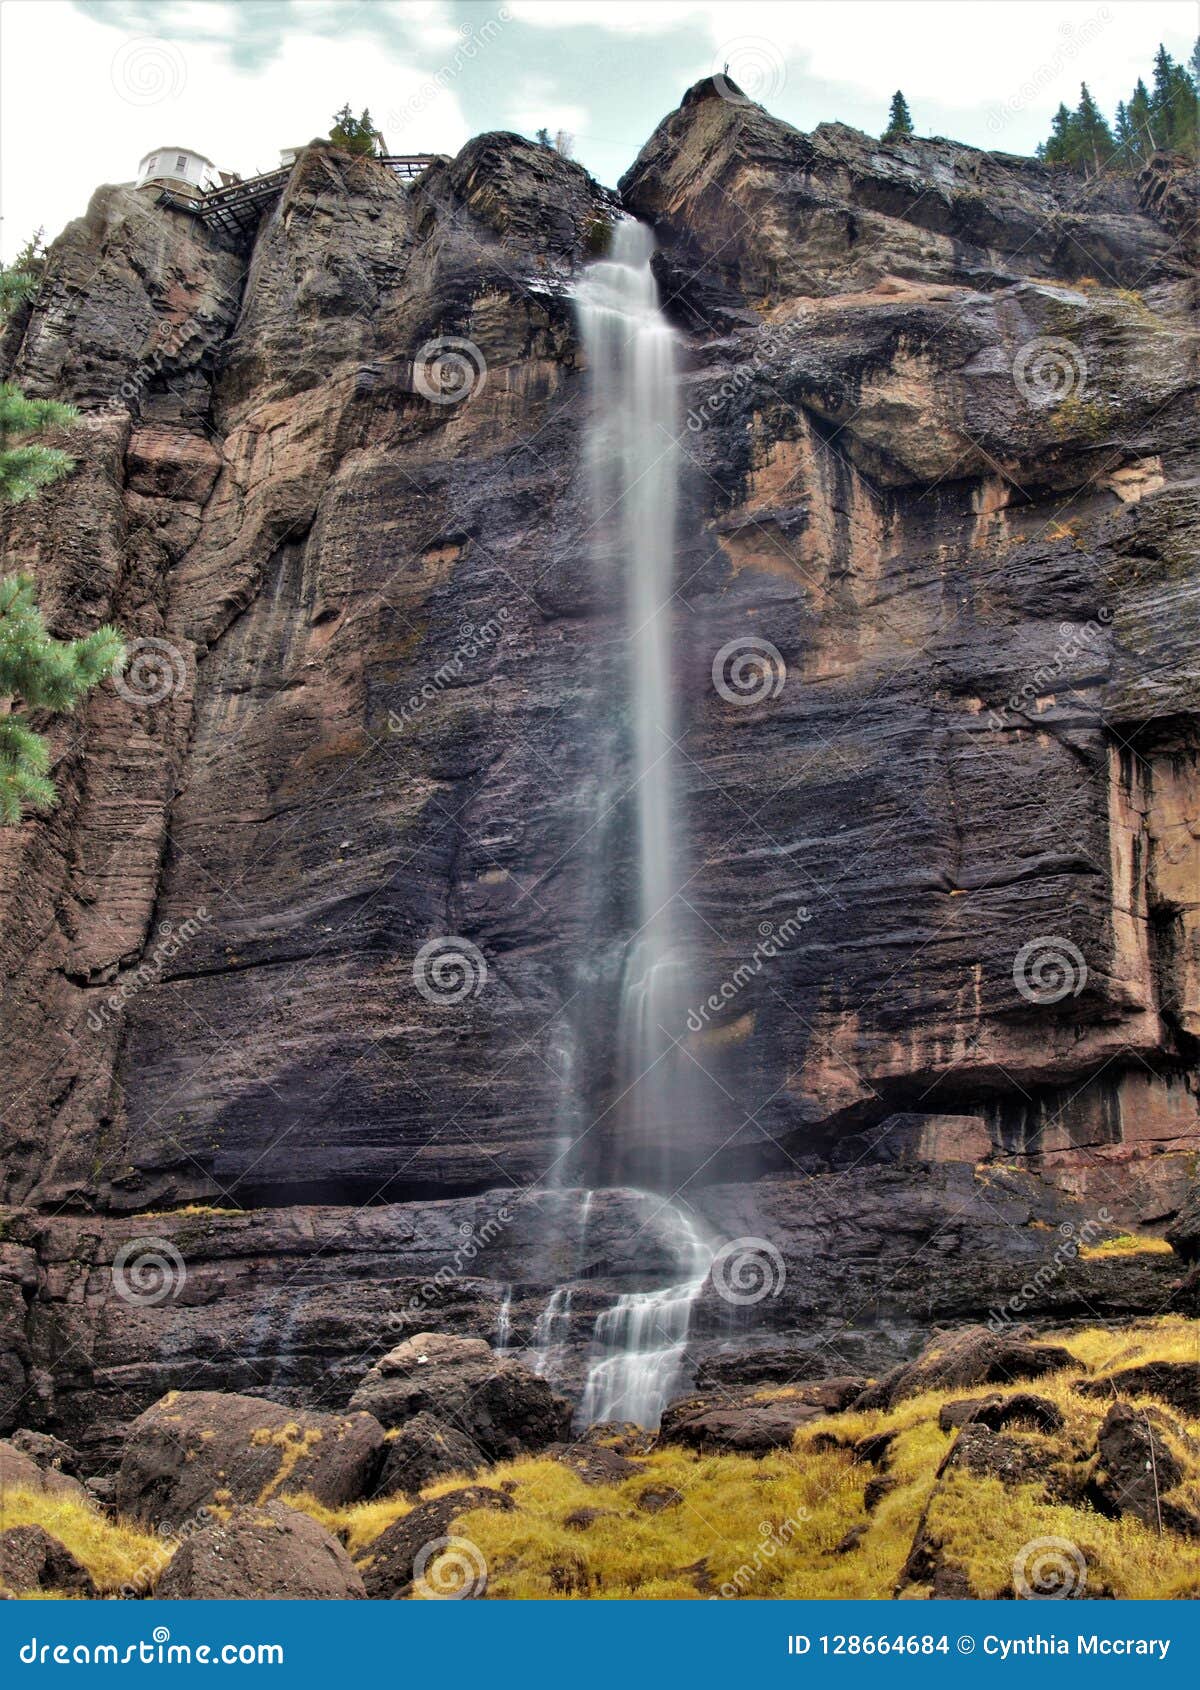 Bridal Veil Falls In Telluride Colorado Stock Photo Image Of Travel Foliage